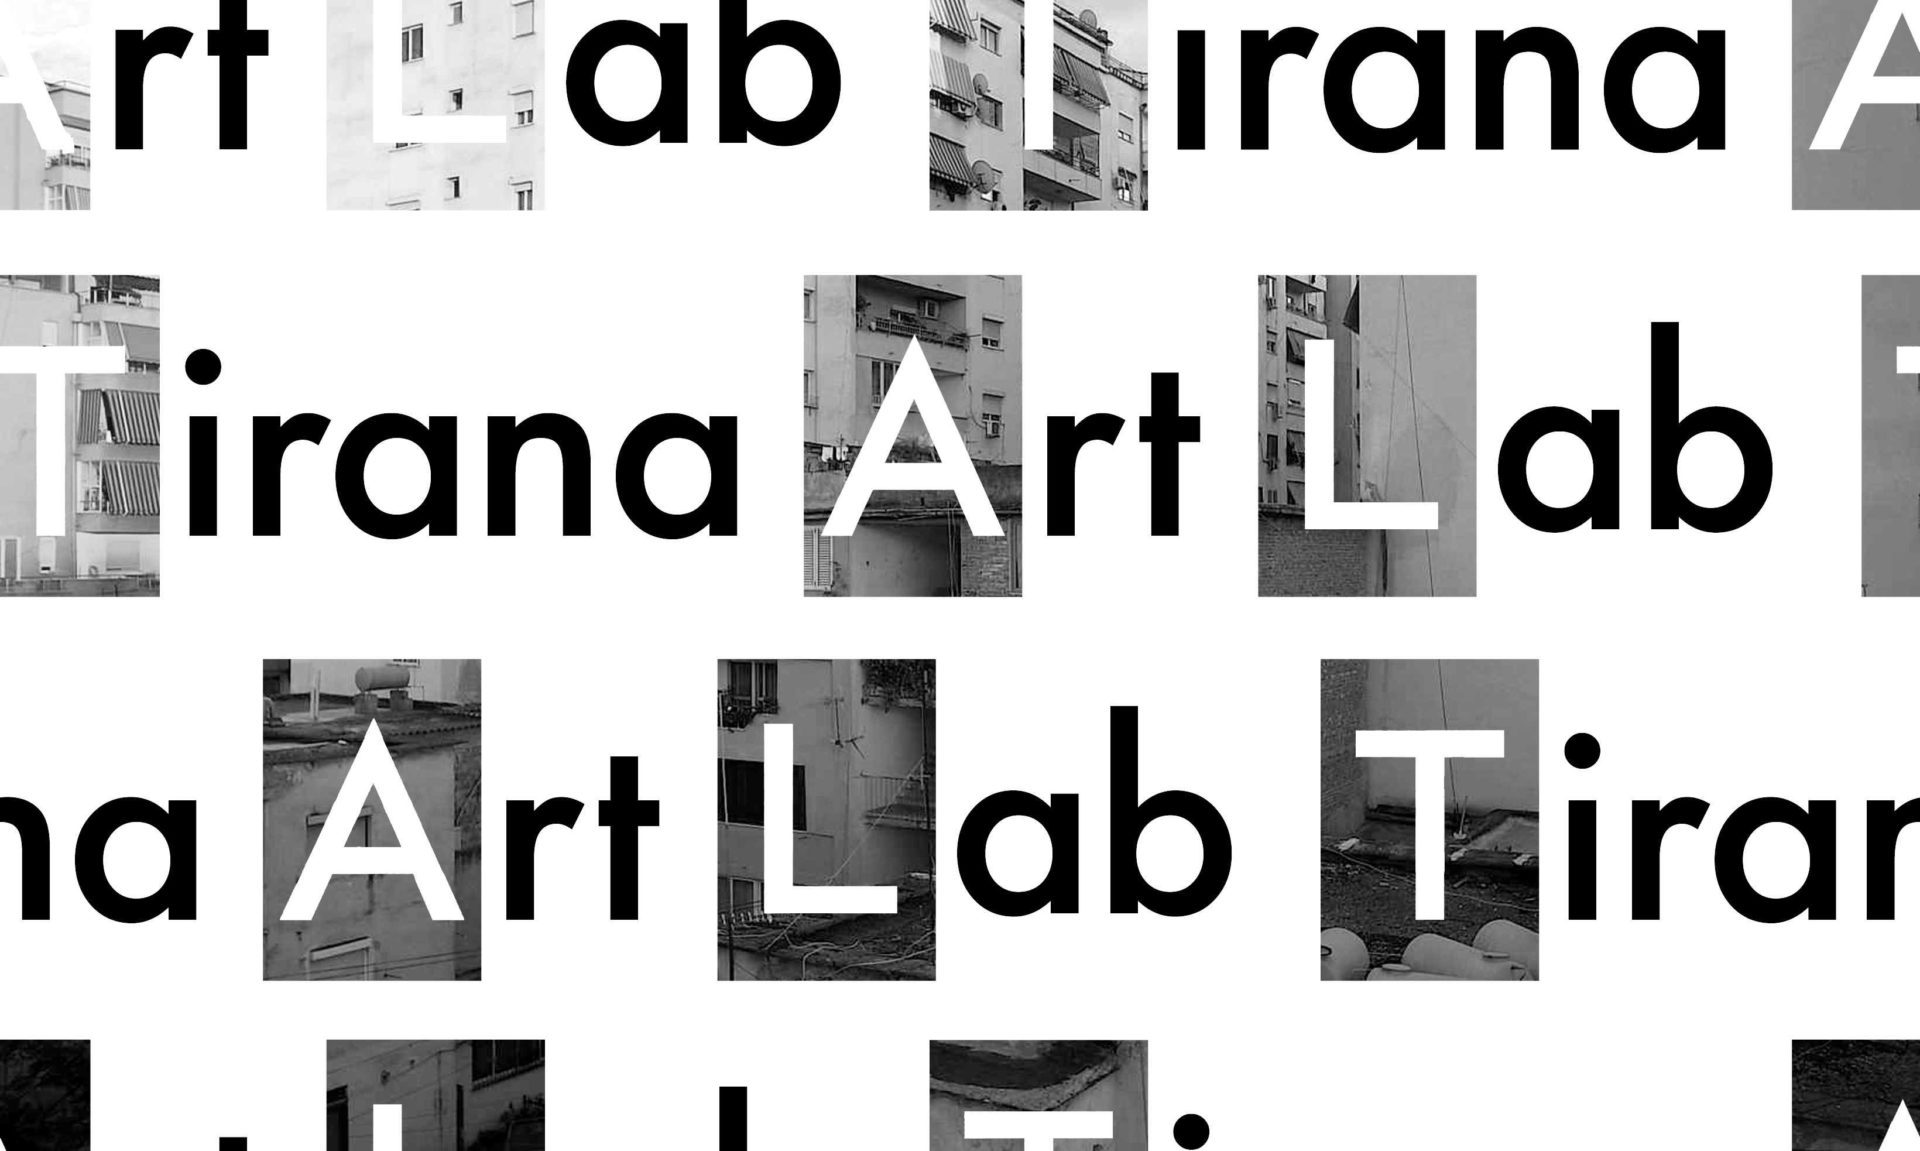 Performative Exhibition Tirana Art Lab